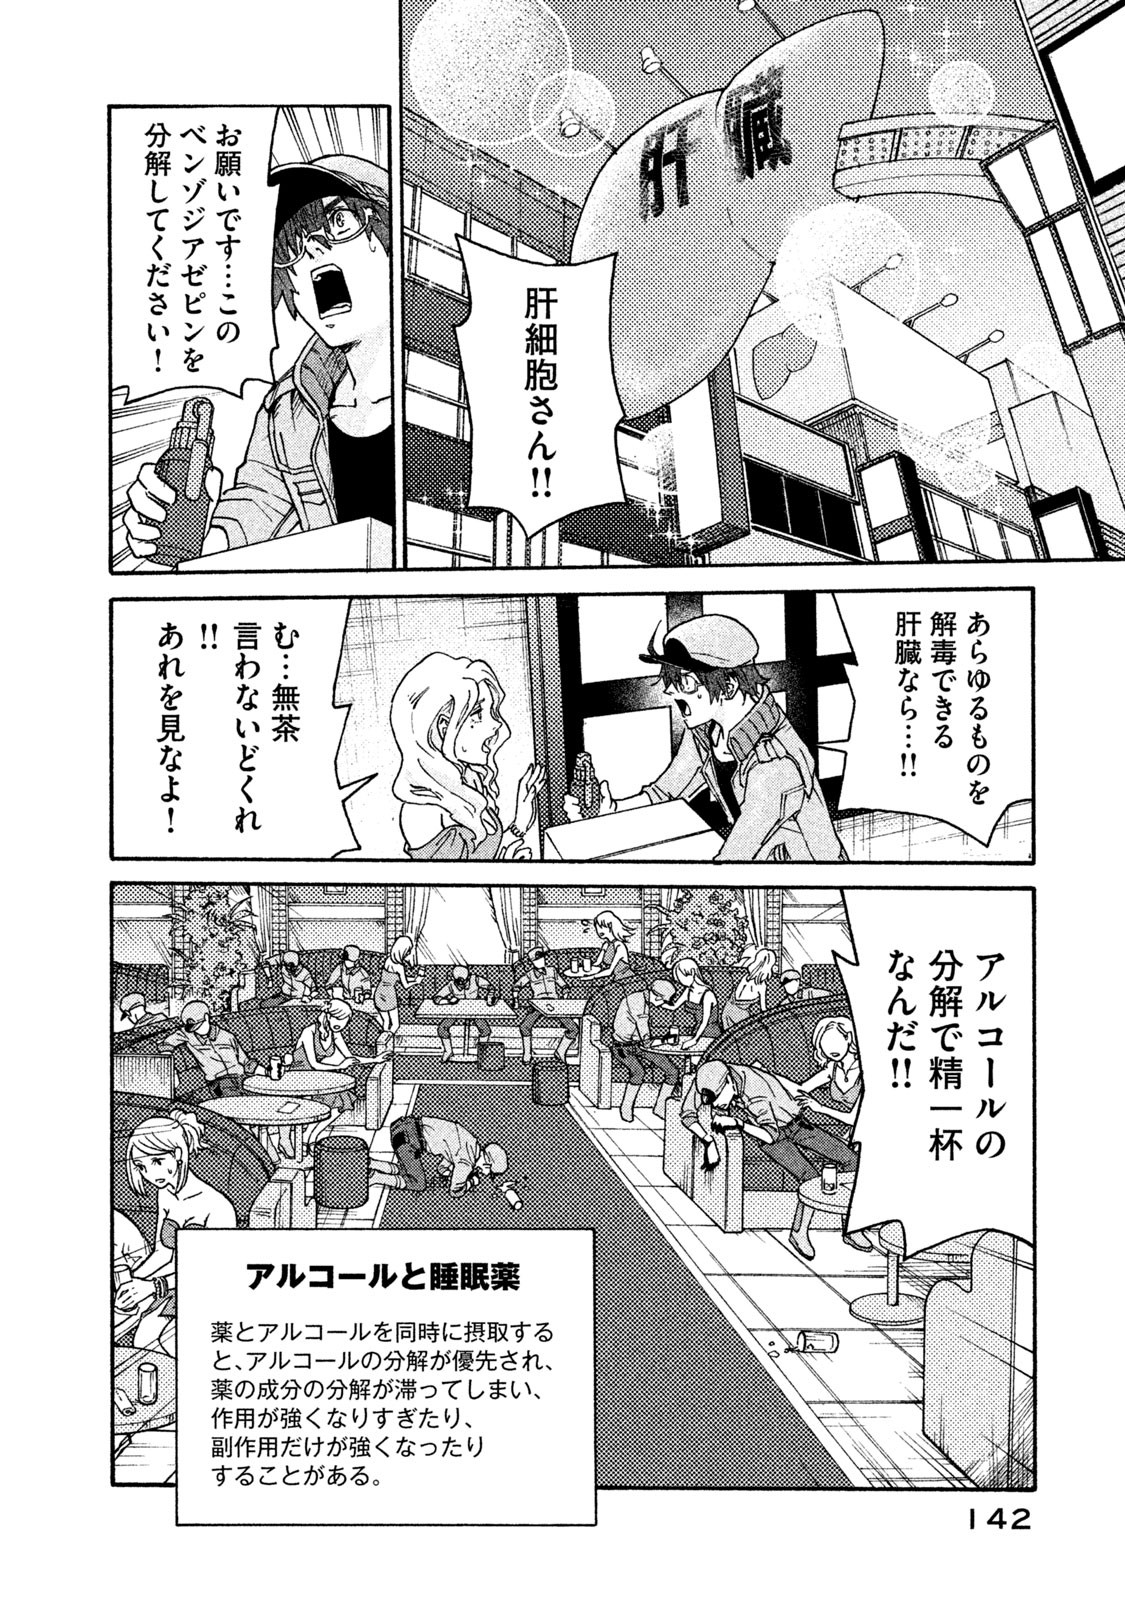 Hataraku Saibou BLACK - Chapter 31 - Page 18